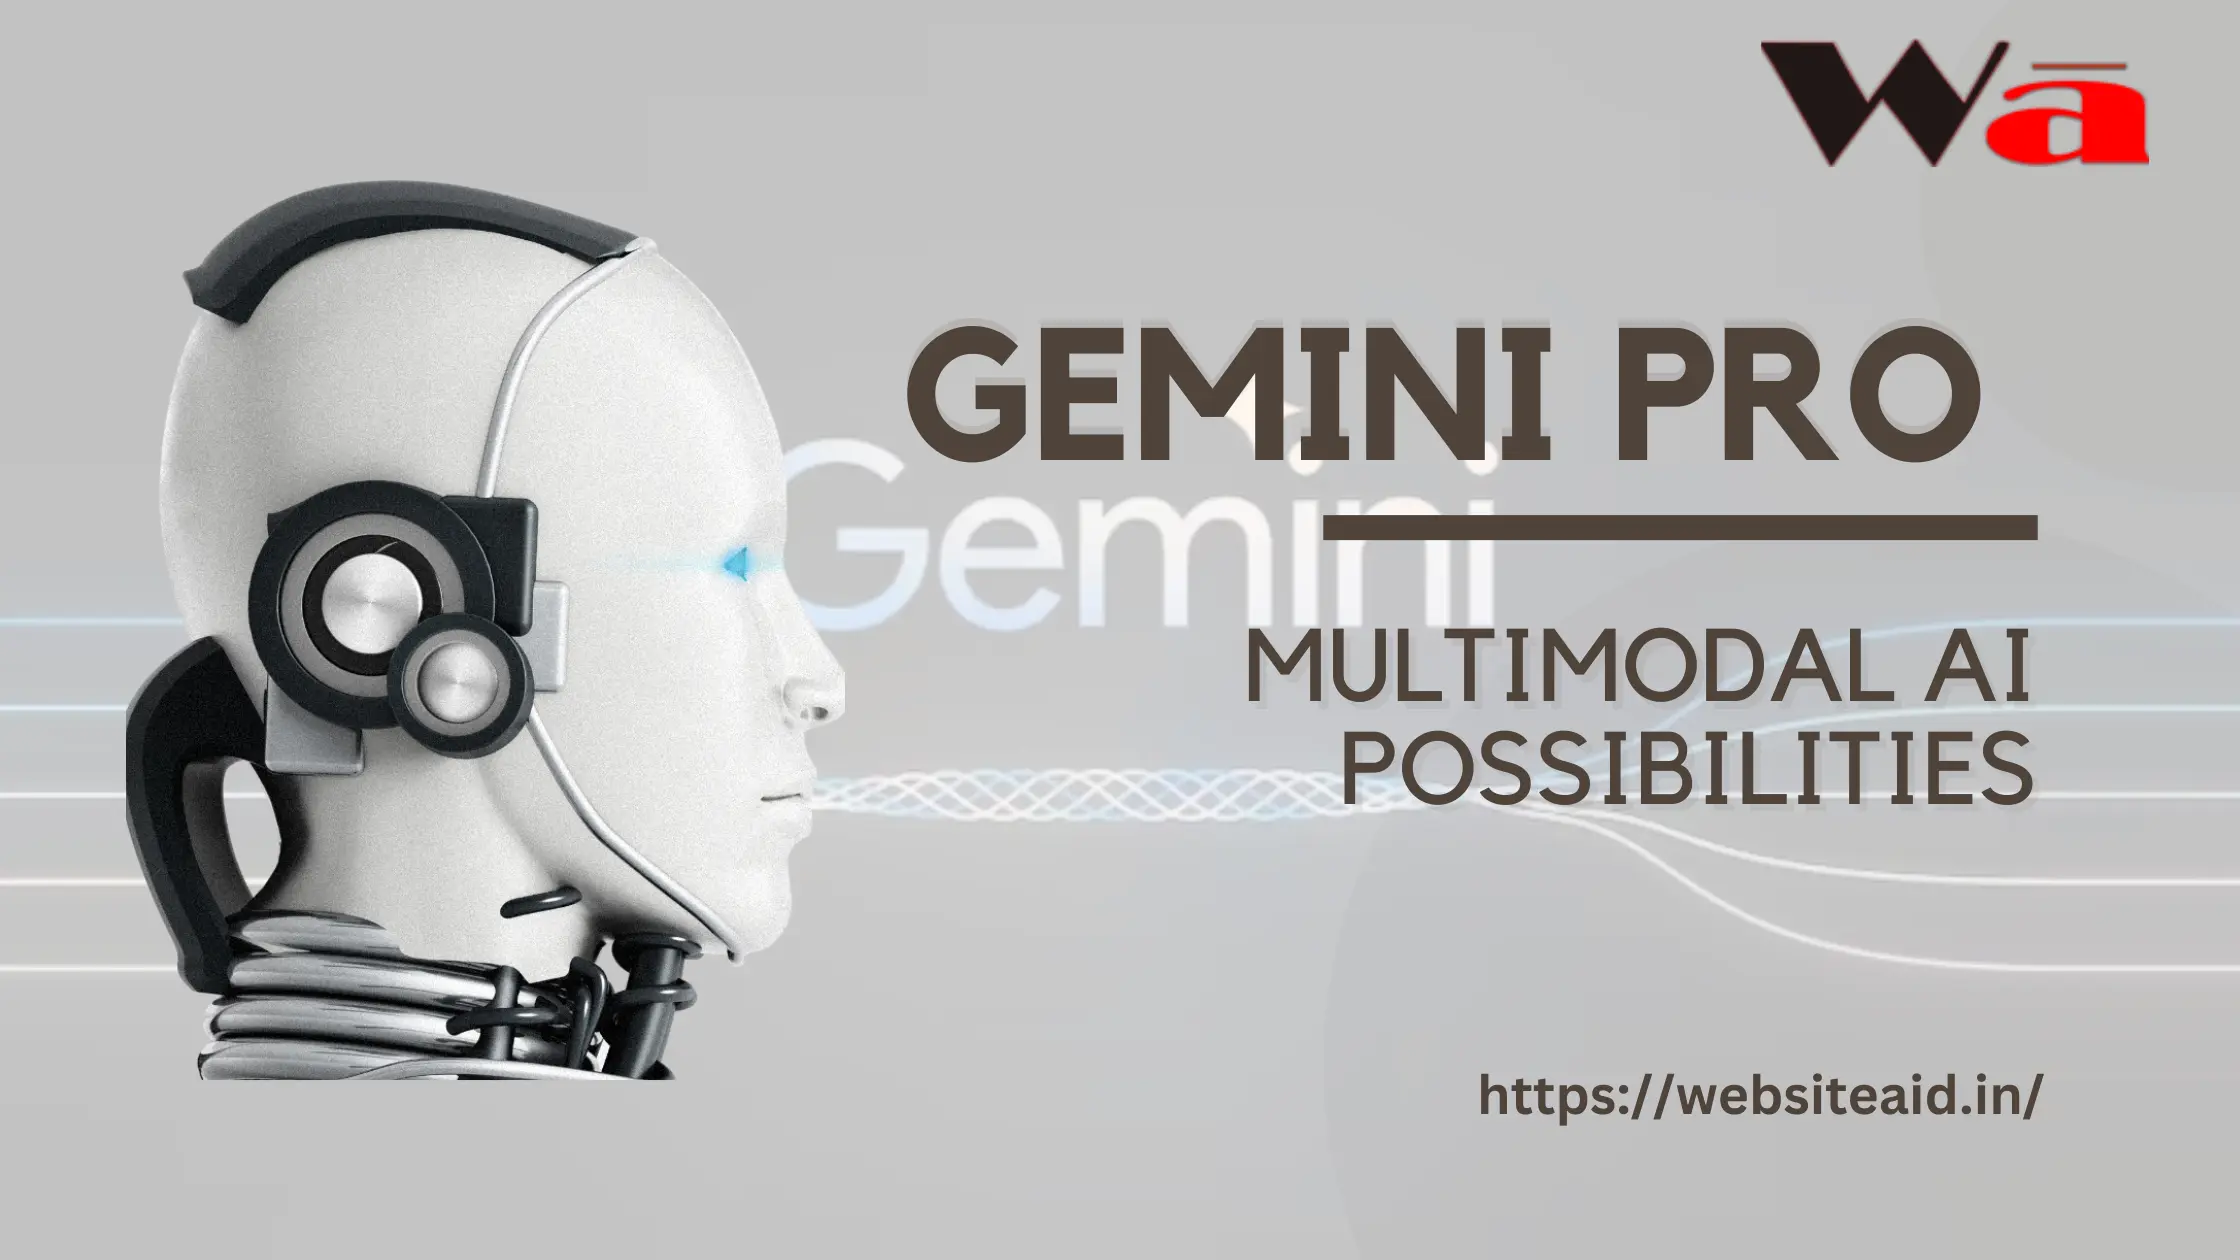 Uses of Gemini Pro